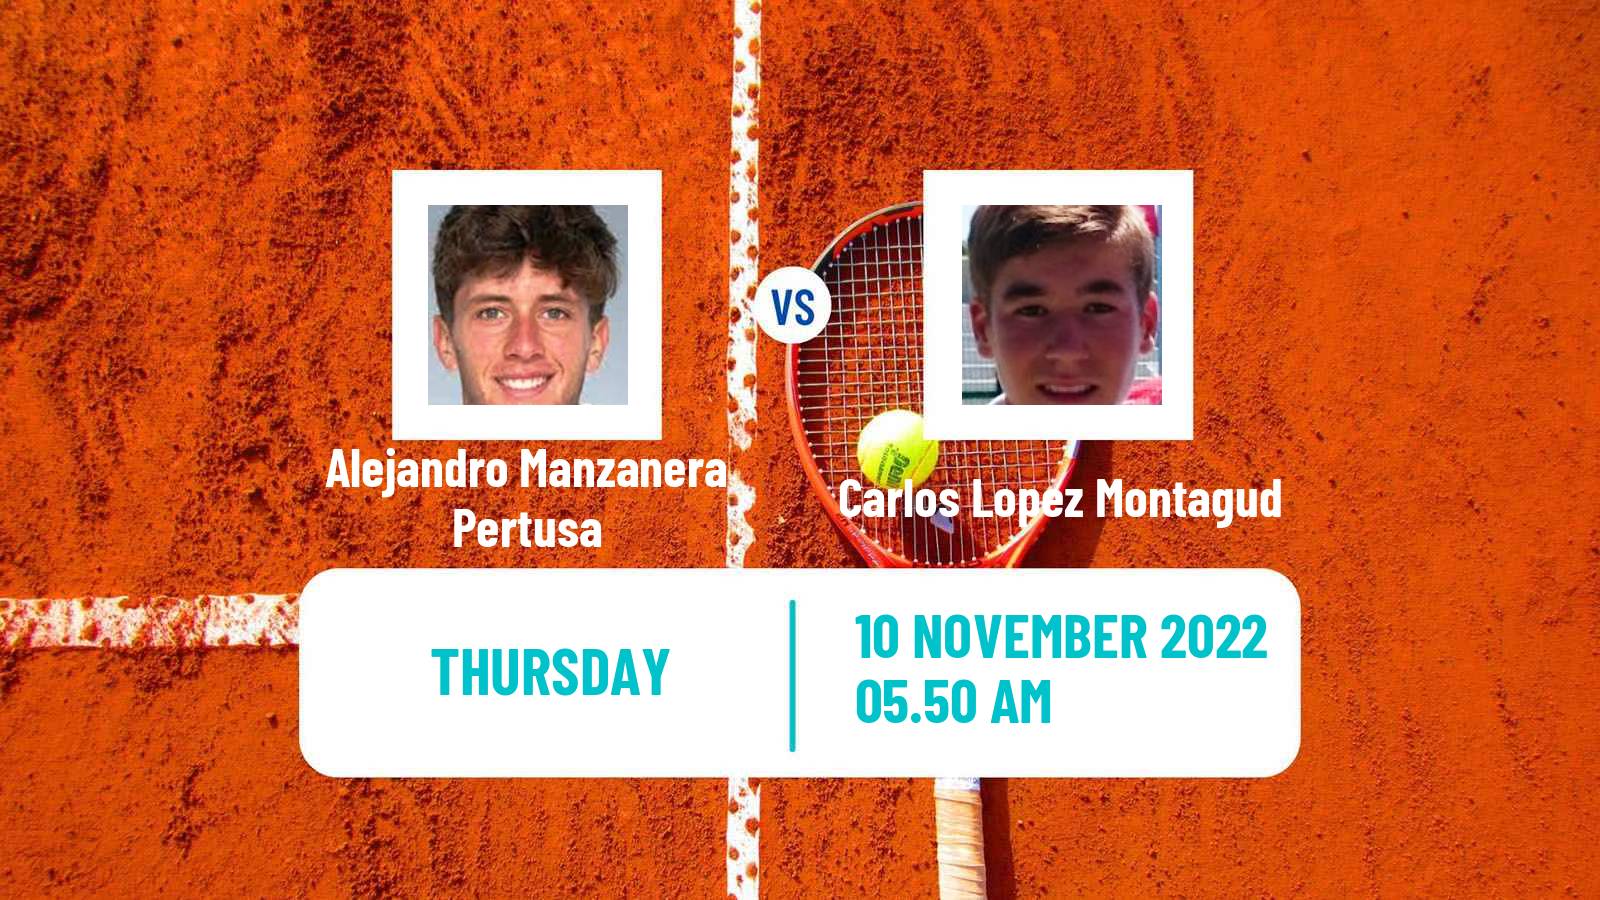 Tennis ITF Tournaments Alejandro Manzanera Pertusa - Carlos Lopez Montagud